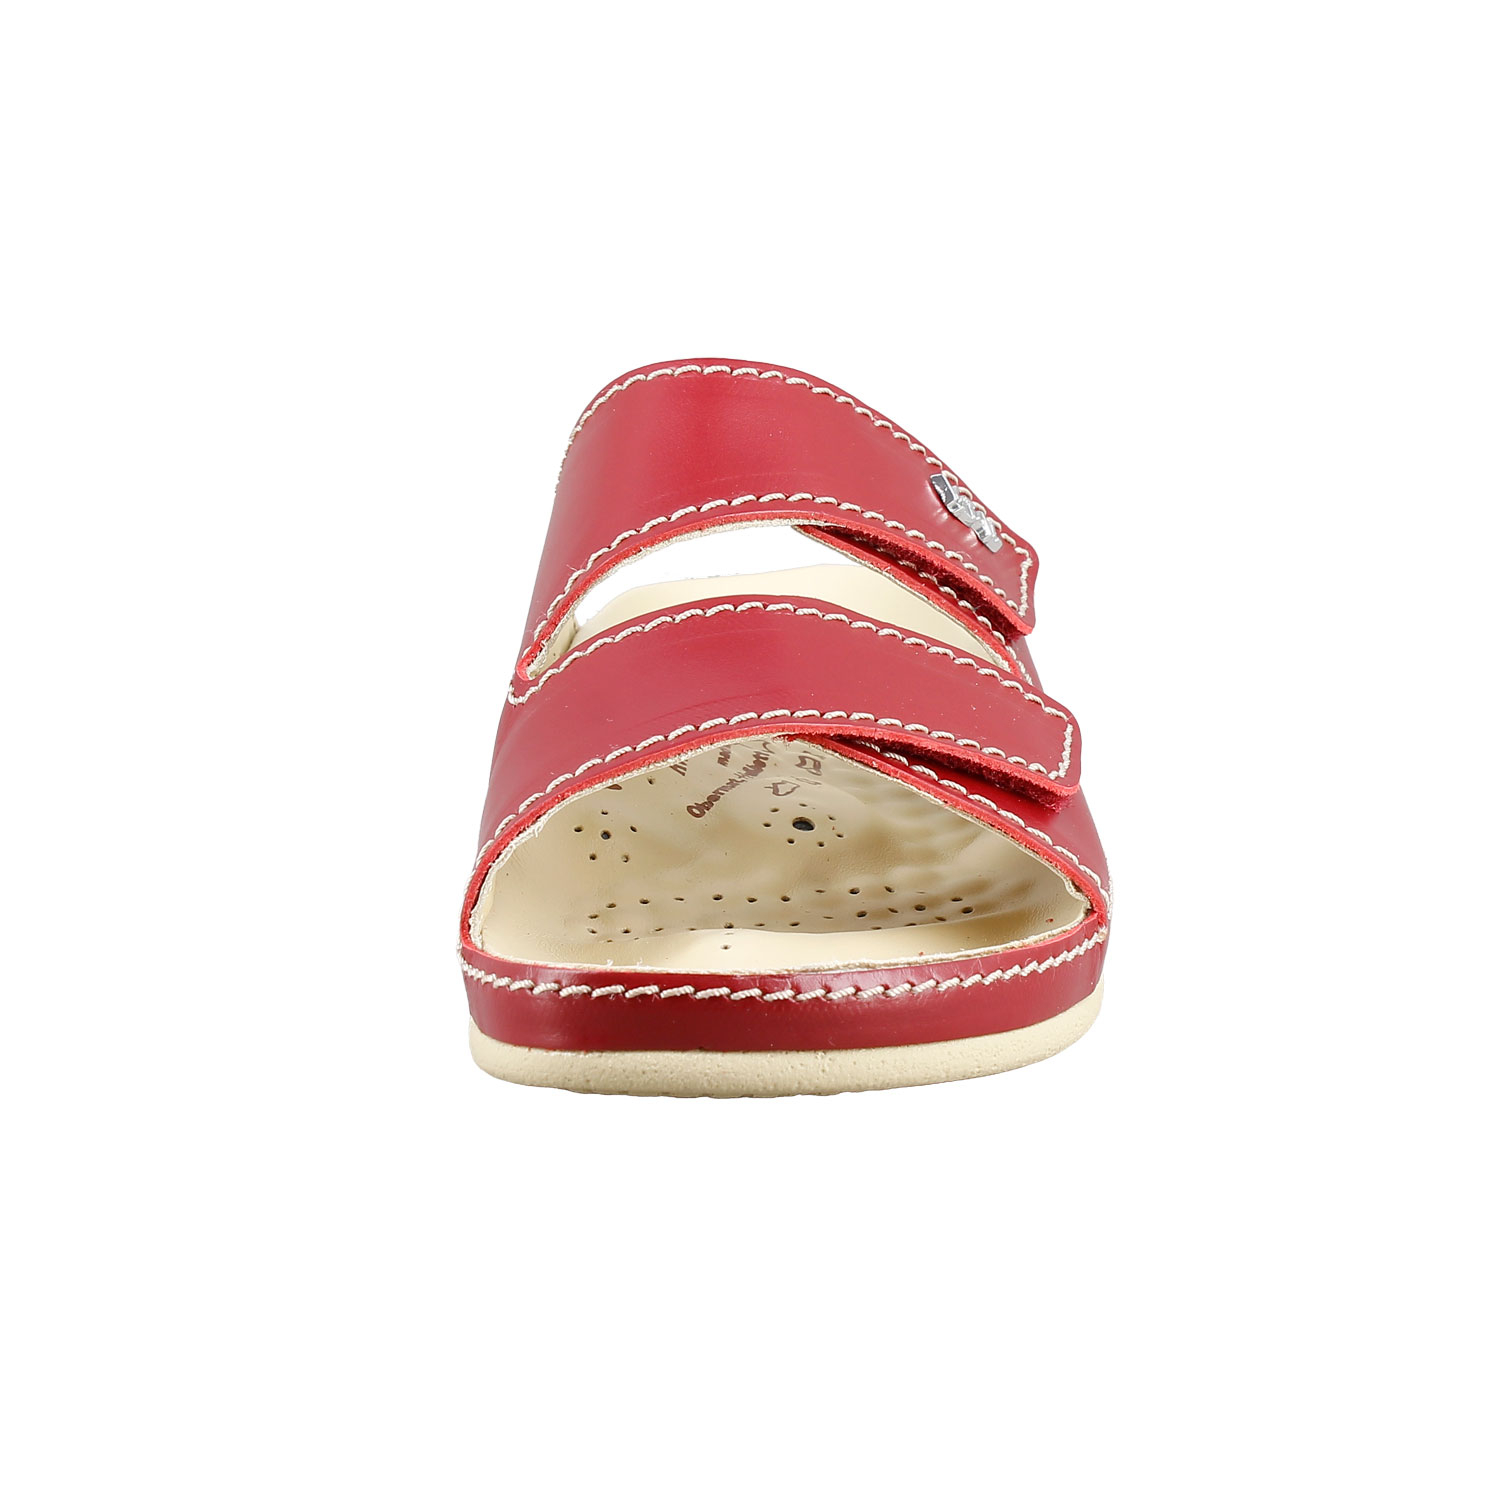 Vital-Schuhe mit Reflexzonenmassage, Rot, Produktbild 3